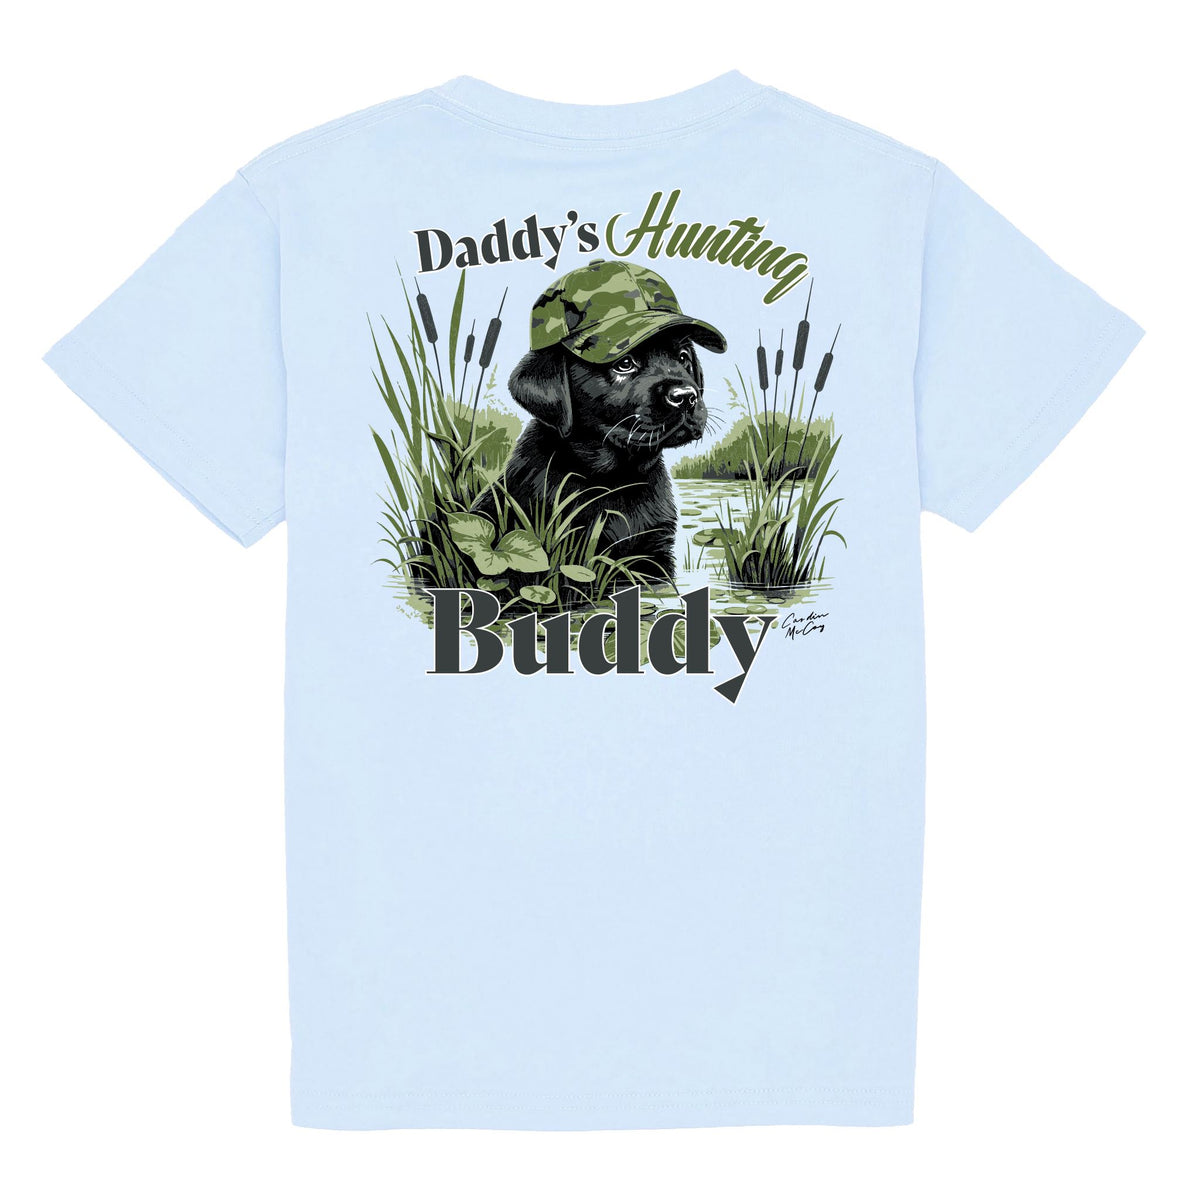 Kids' Daddy's Hunting Buddy Short Sleeve Pocket Tee Short Sleeve T-Shirt Cardin McCoy Cool Blue XXS (2/3) 